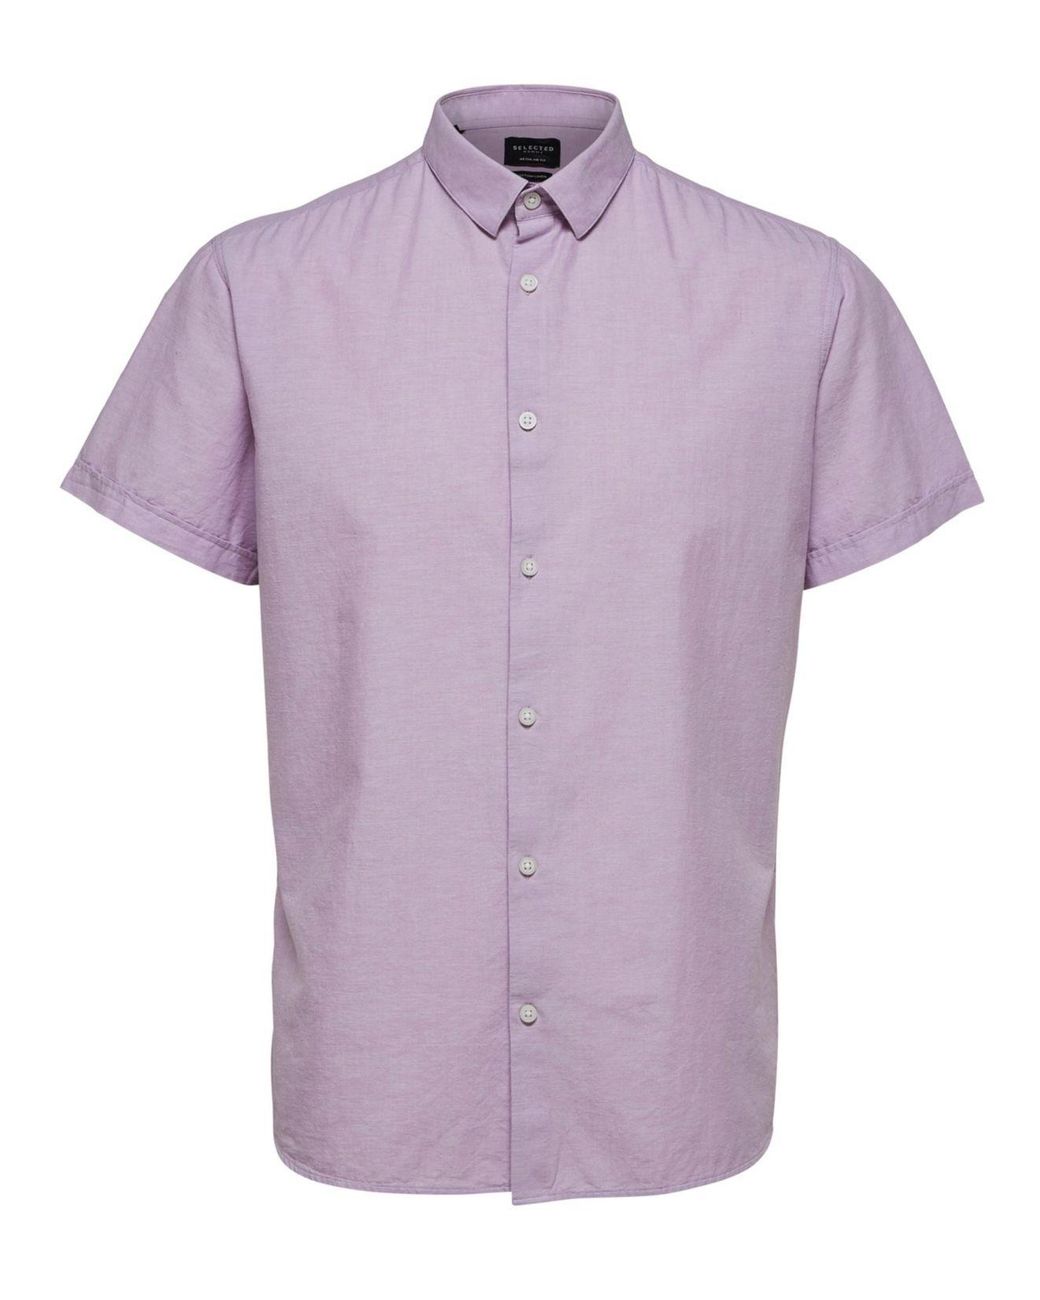 SELECTED Short Sleeve Linen Shirt in Lavender h (Purple) for Men - Lyst